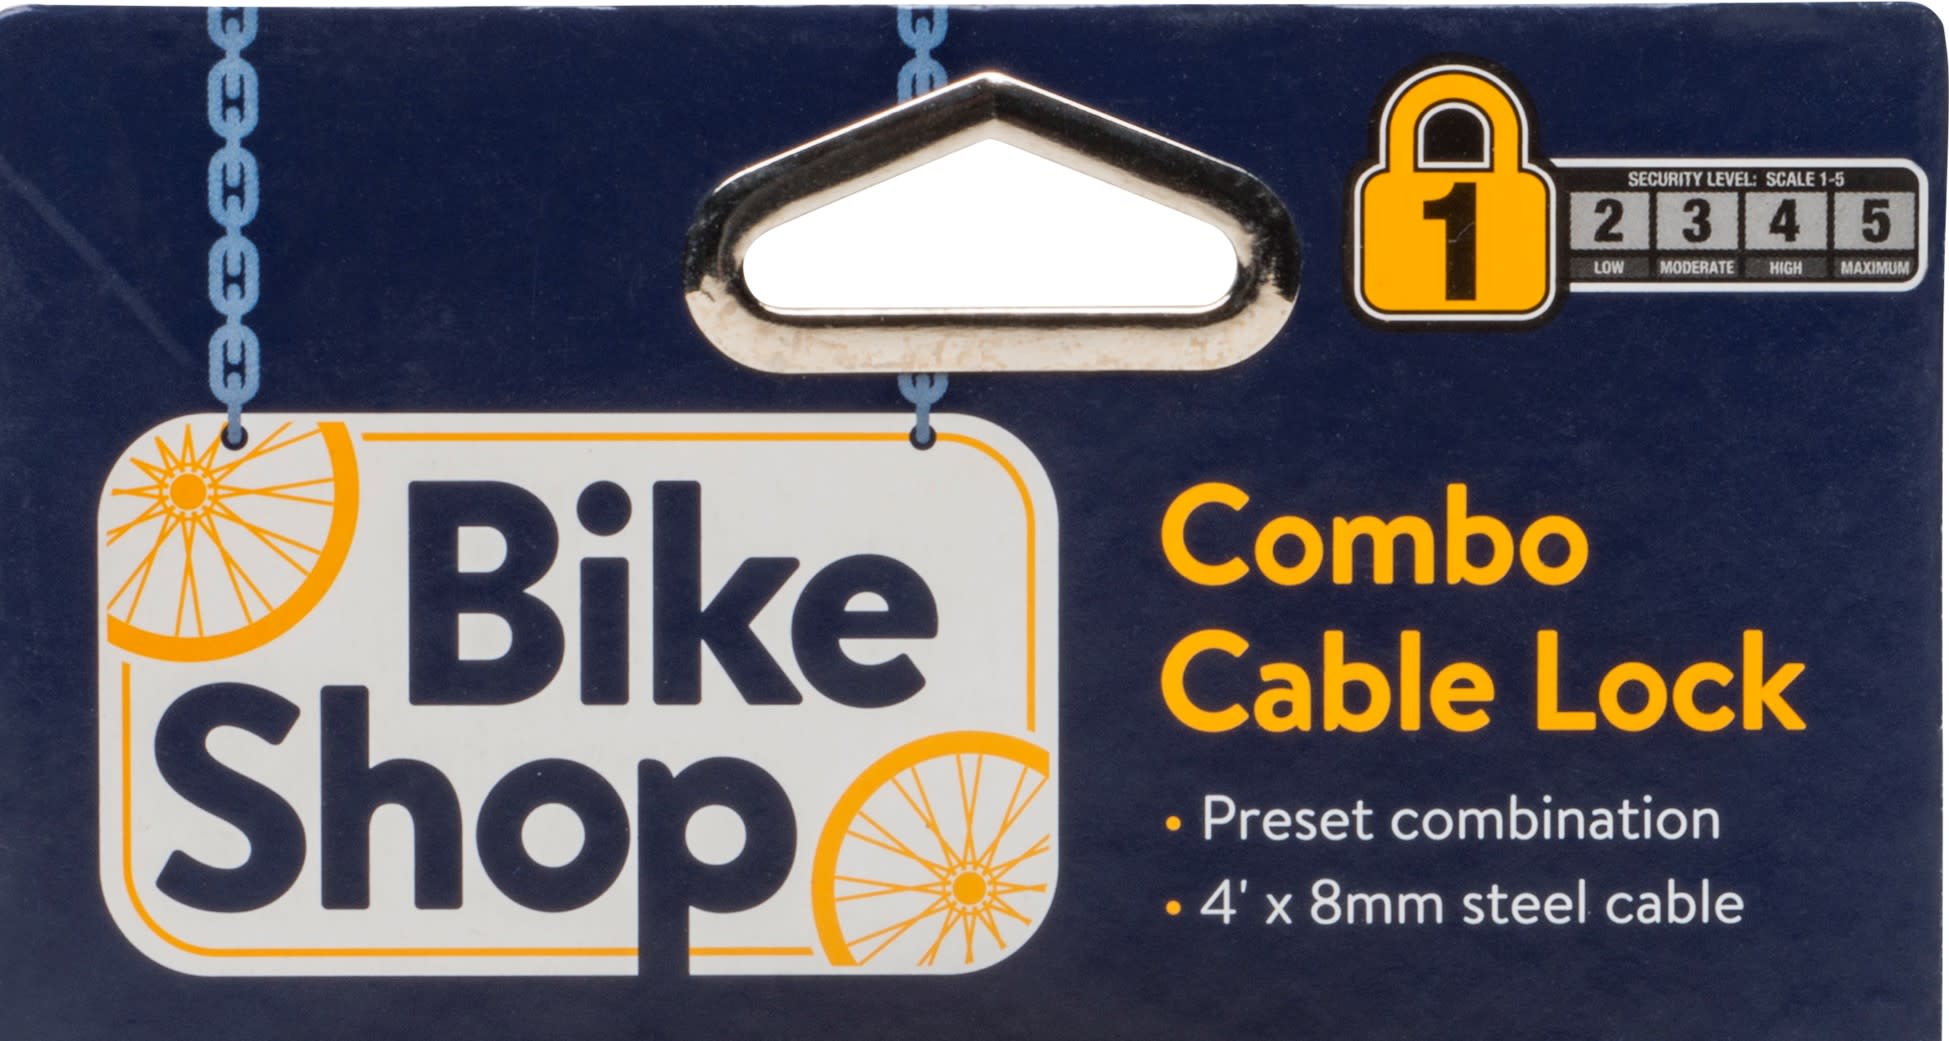 Bike Shop 4ft x 8mm Combo Cable Bike Lock - image 2 of 5